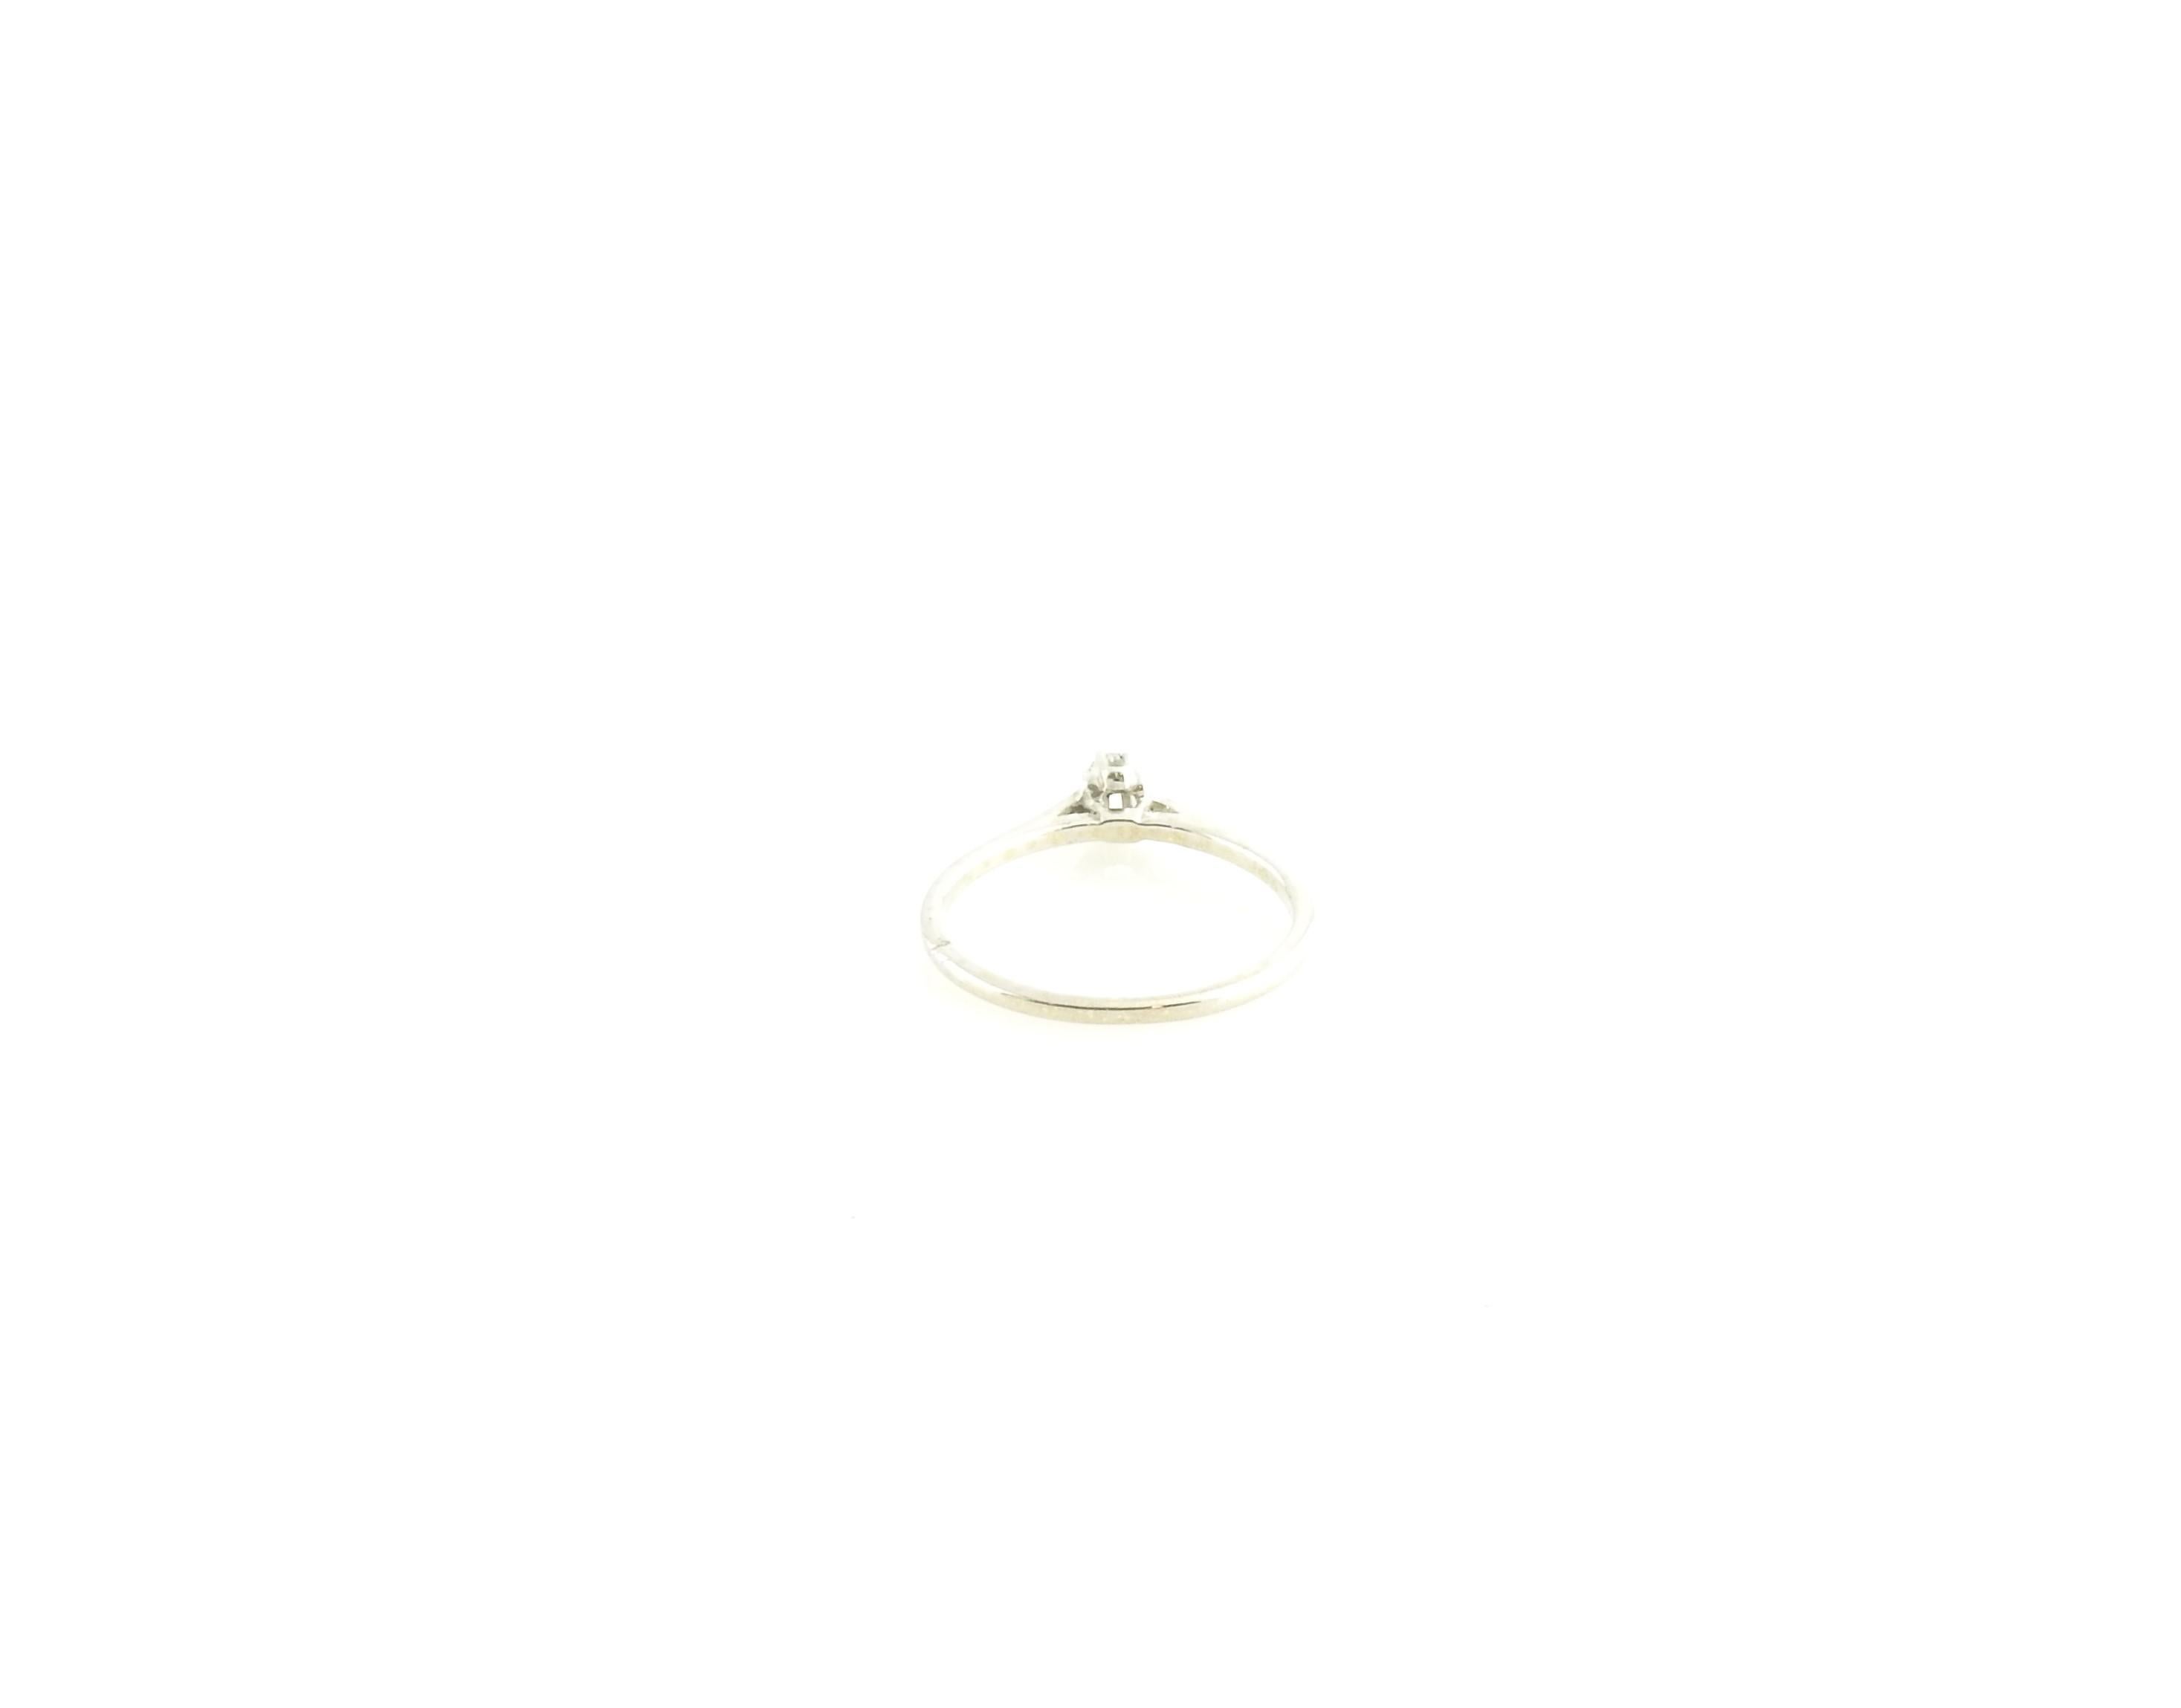 Round Cut 14 Karat White Gold Diamond Engagement Ring For Sale